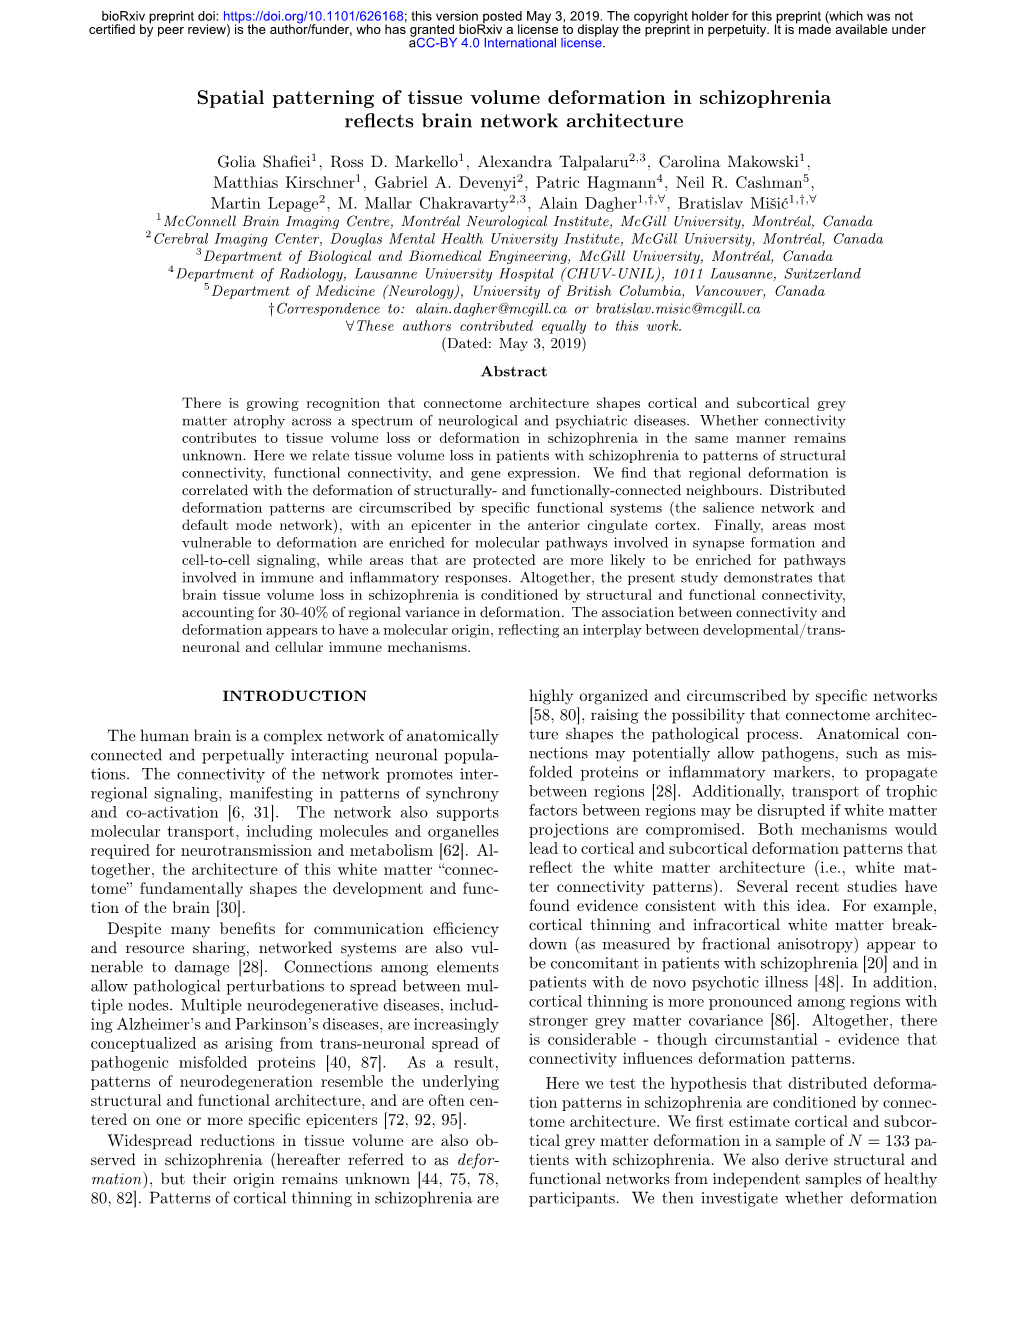 Spatial Patterning of Tissue Volume Deformation in Schizophrenia Reﬂects Brain Network Architecture